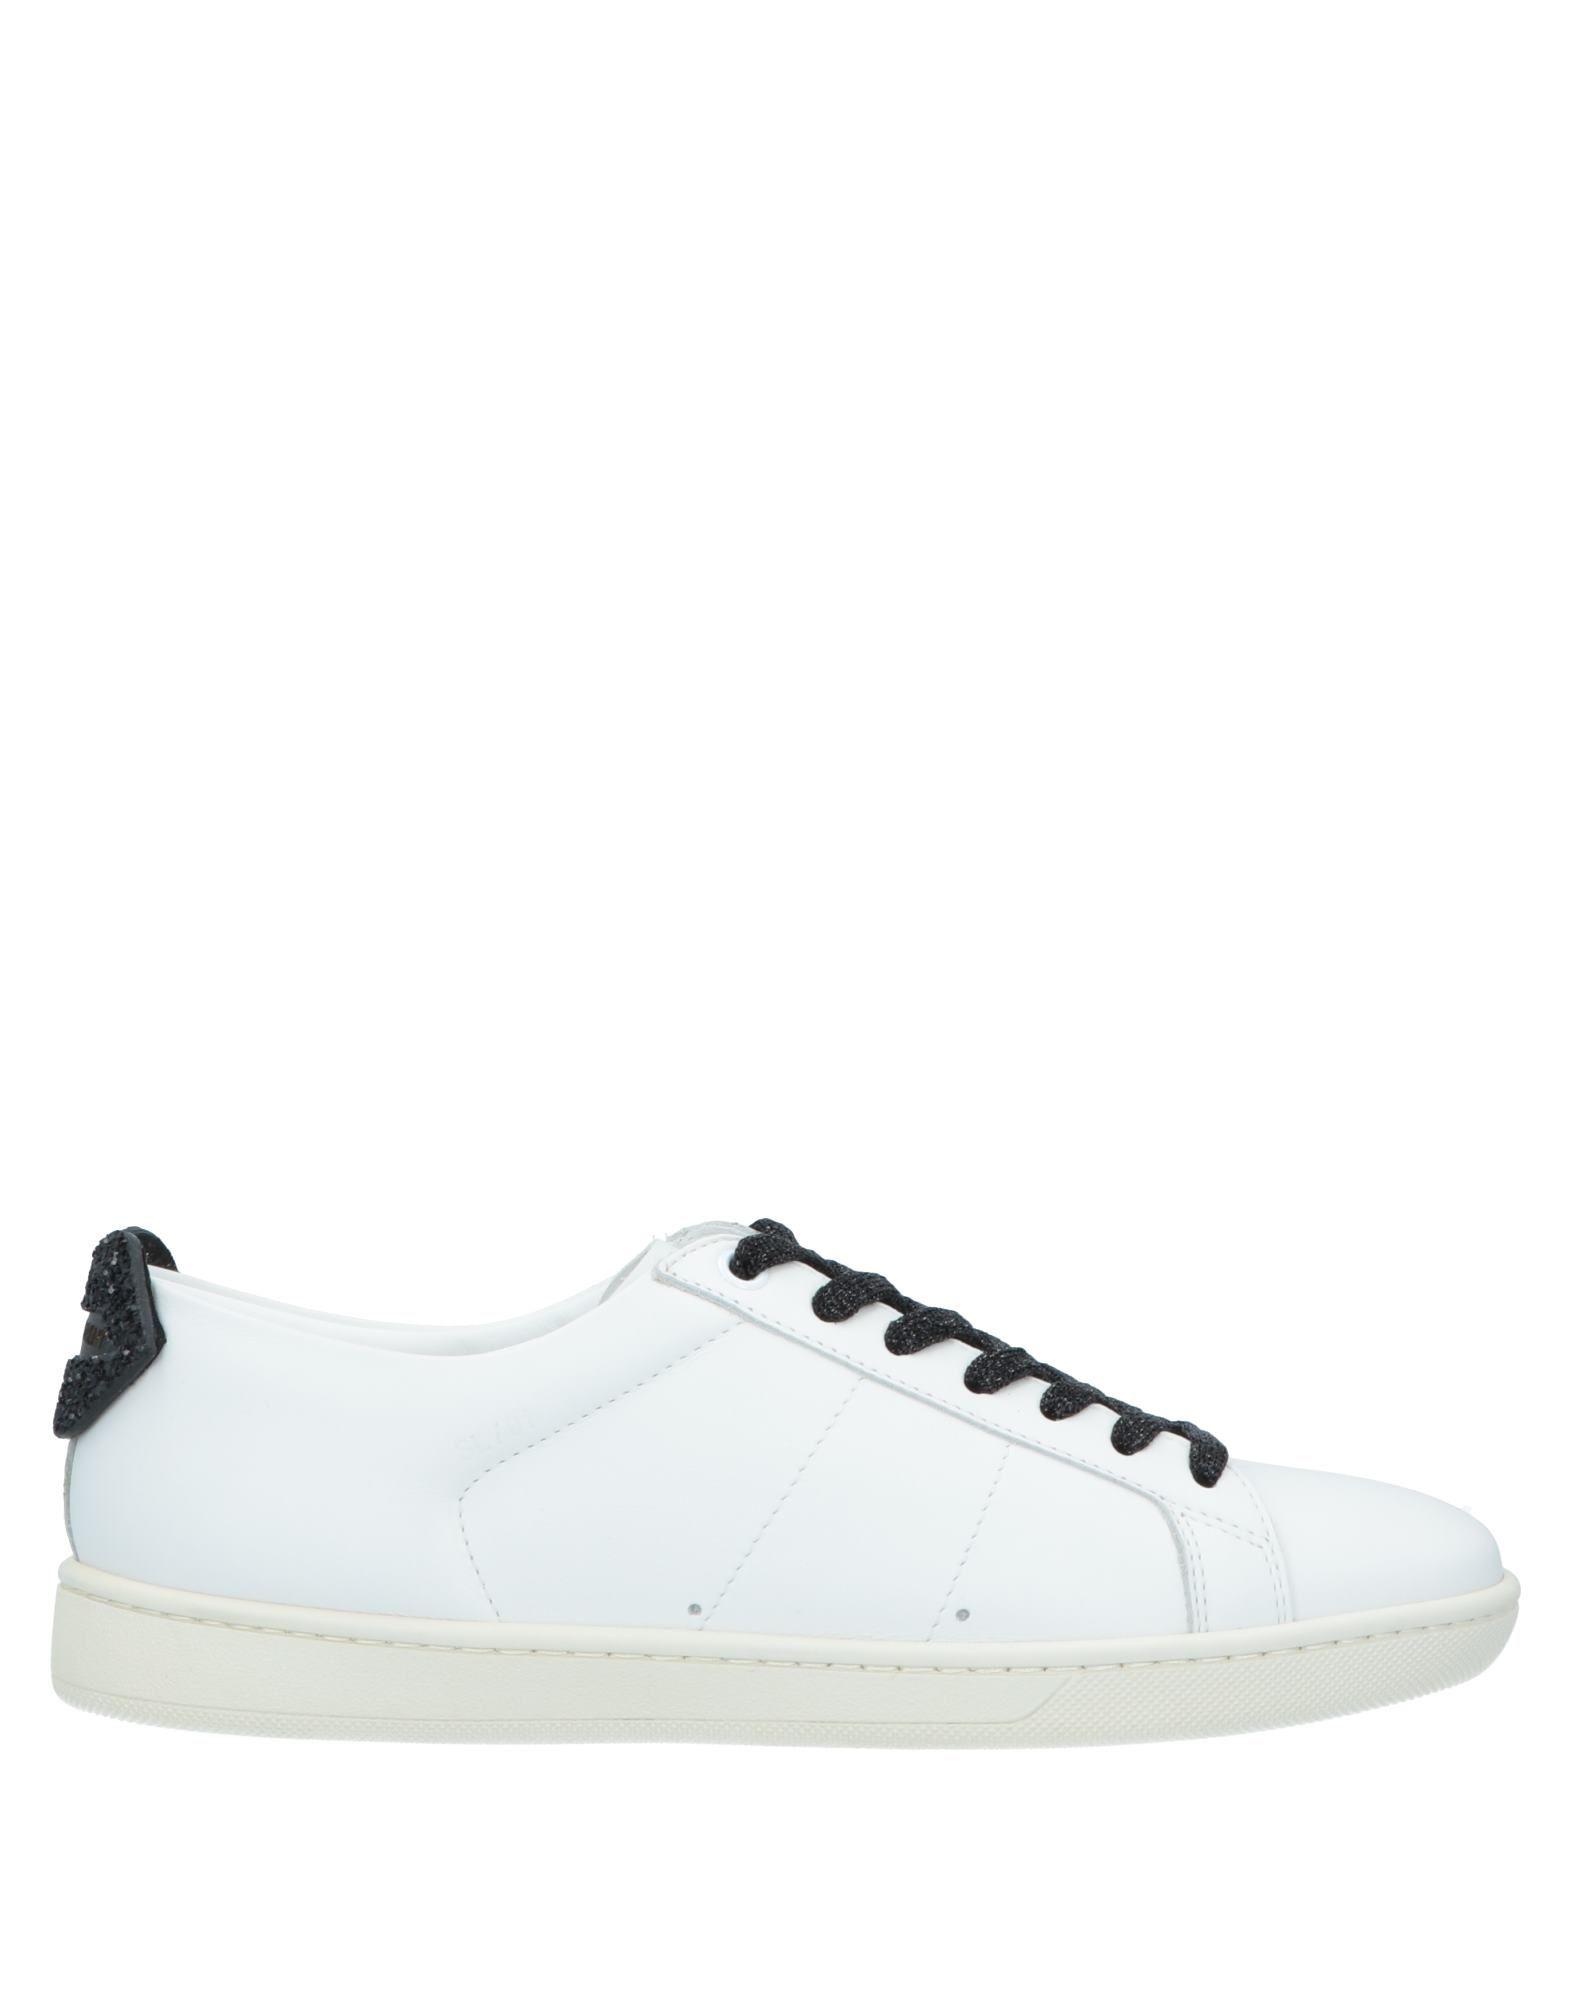 Saint Laurent Low-tops & Sneakers in White - Lyst